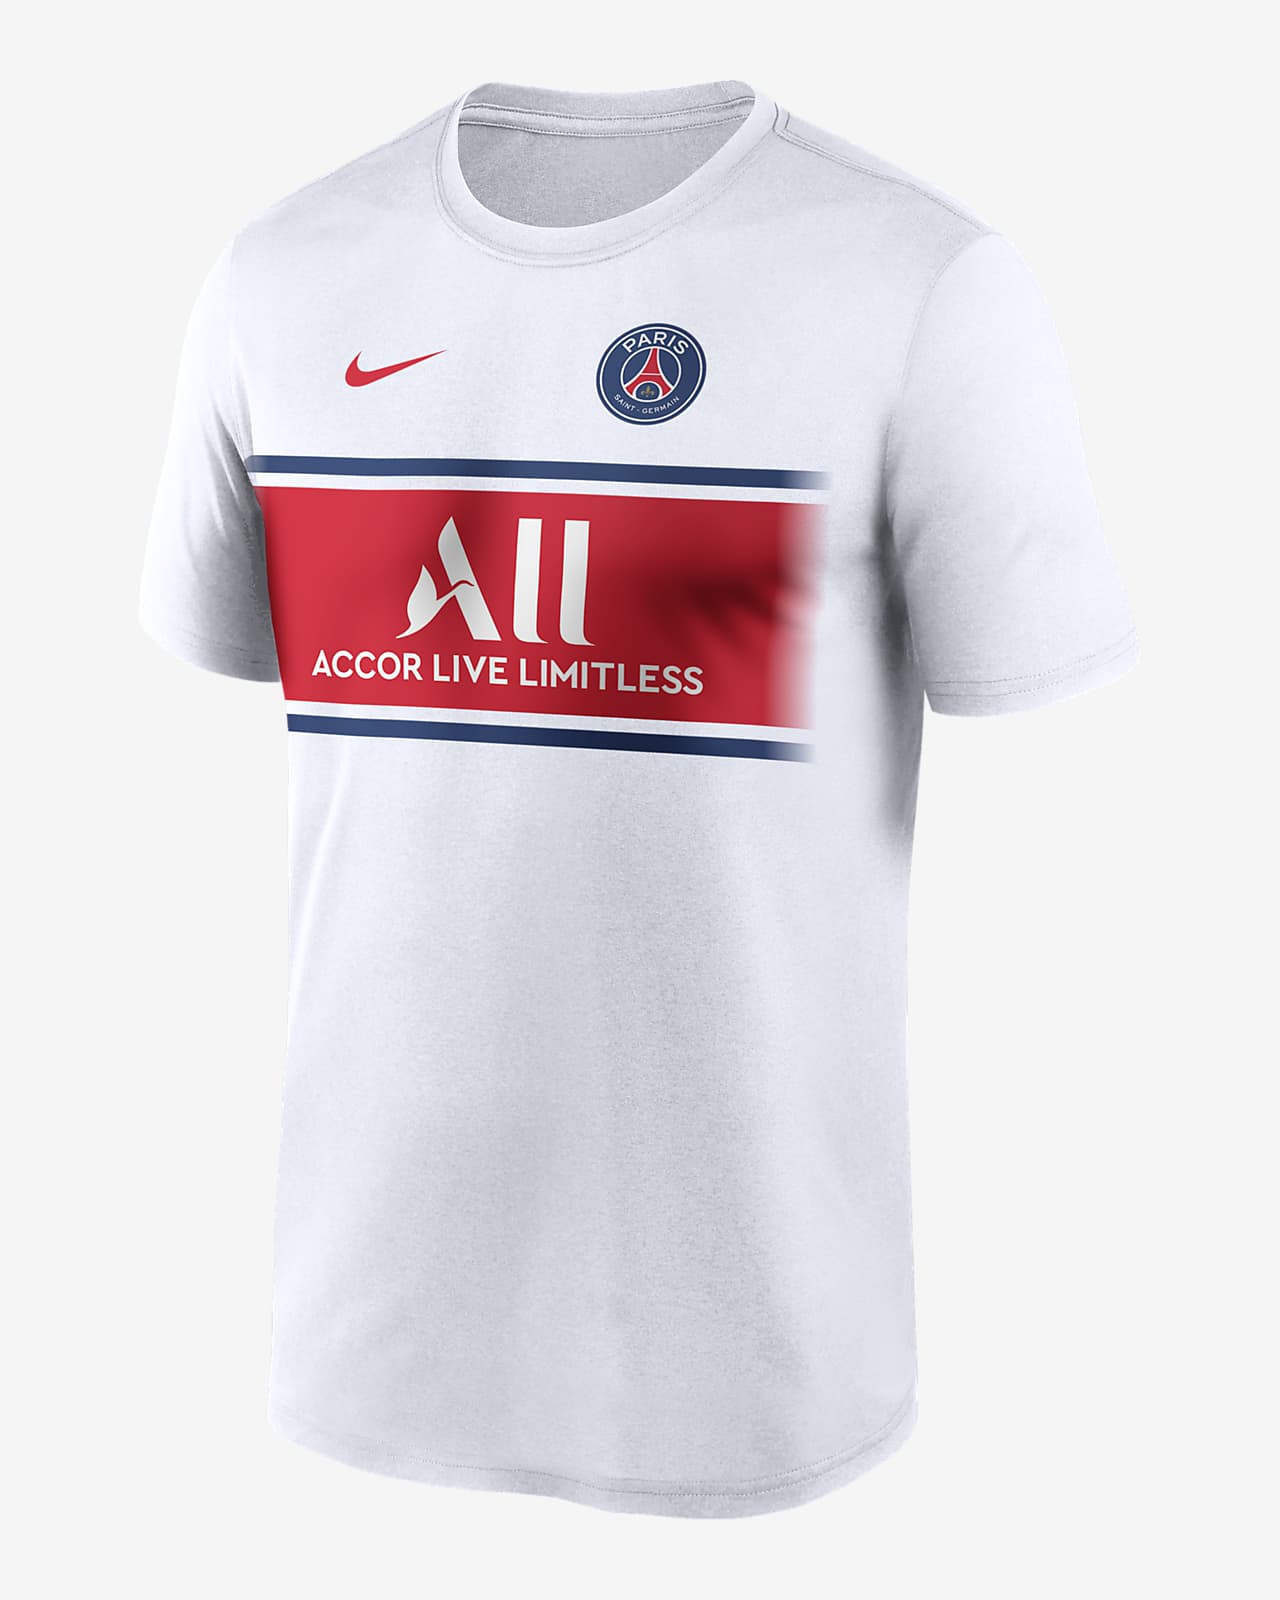 Paris Saint-Germain (Marquinhos) Soccer T-Shirt.